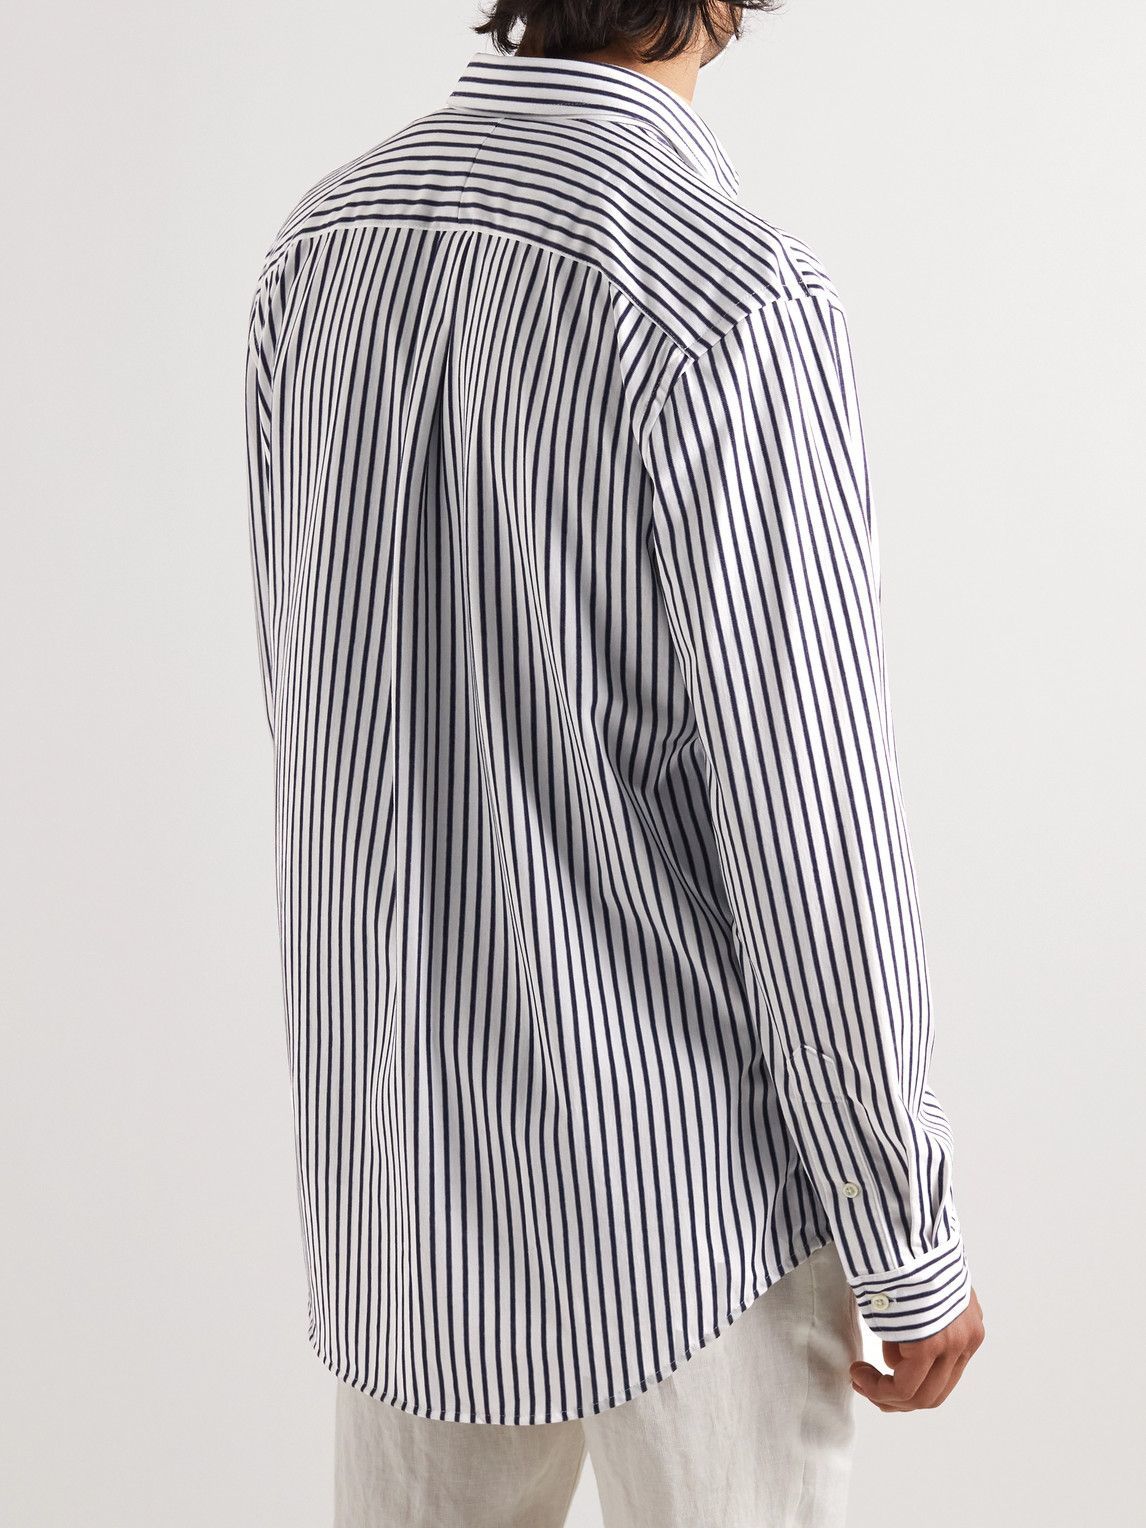 Polo Ralph Lauren - Logo-Embroidered Striped Cotton-Jersey Shirt - Blue